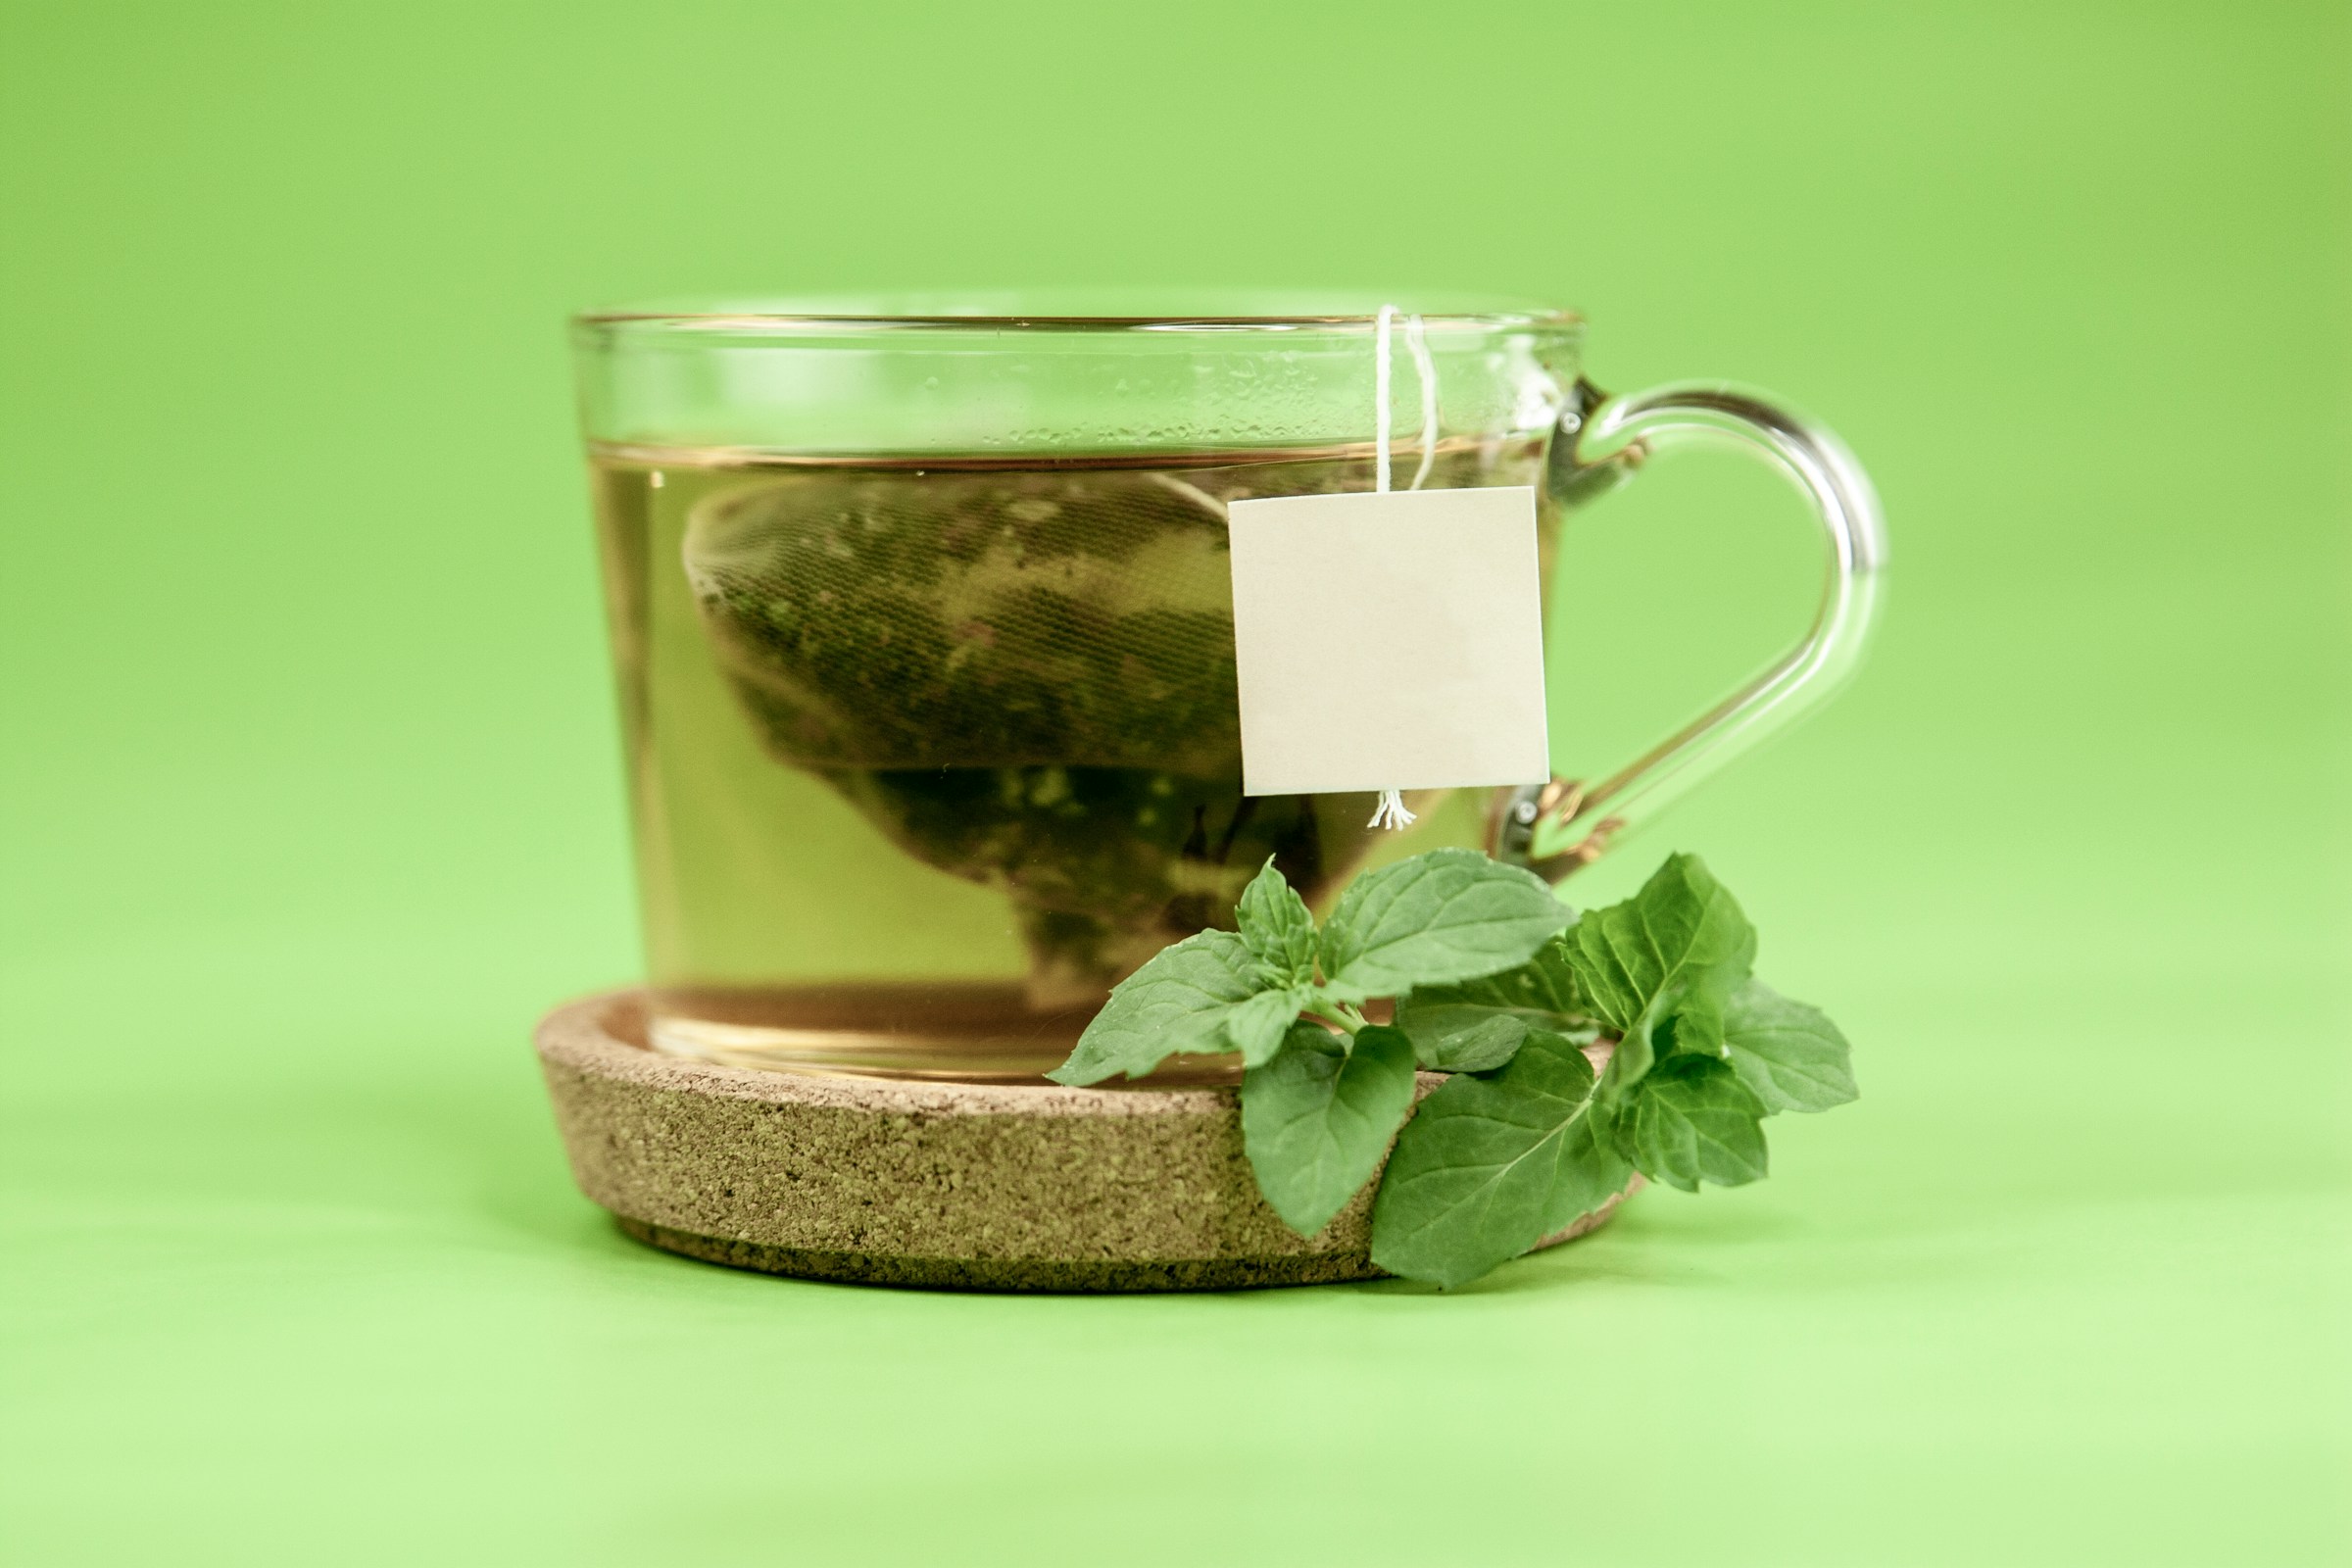 A mug of green tea | Source: Unsplash